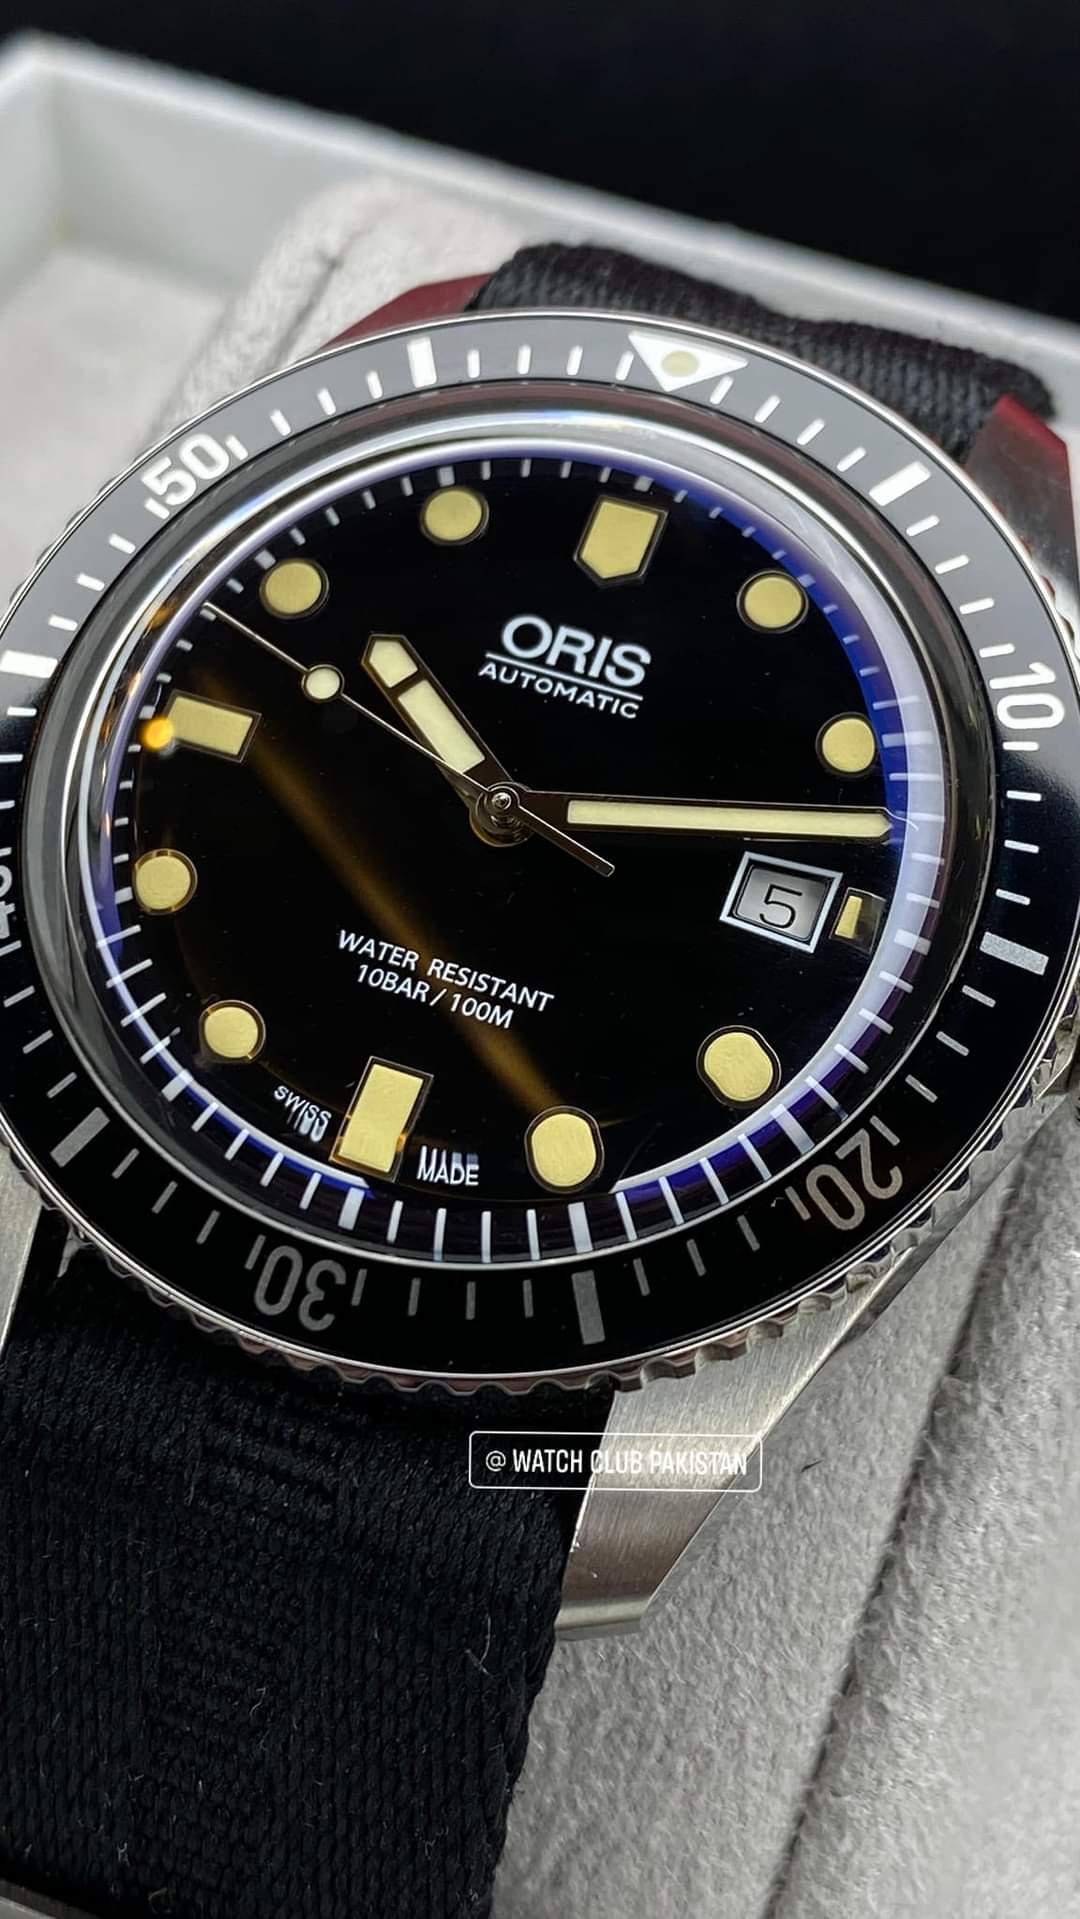 ORIS
ORIS Divers Sixty-five Automatic Black Dial Black NATO Strap (Pre-owned)
01 733 7720 4054-07 5 21 26FC